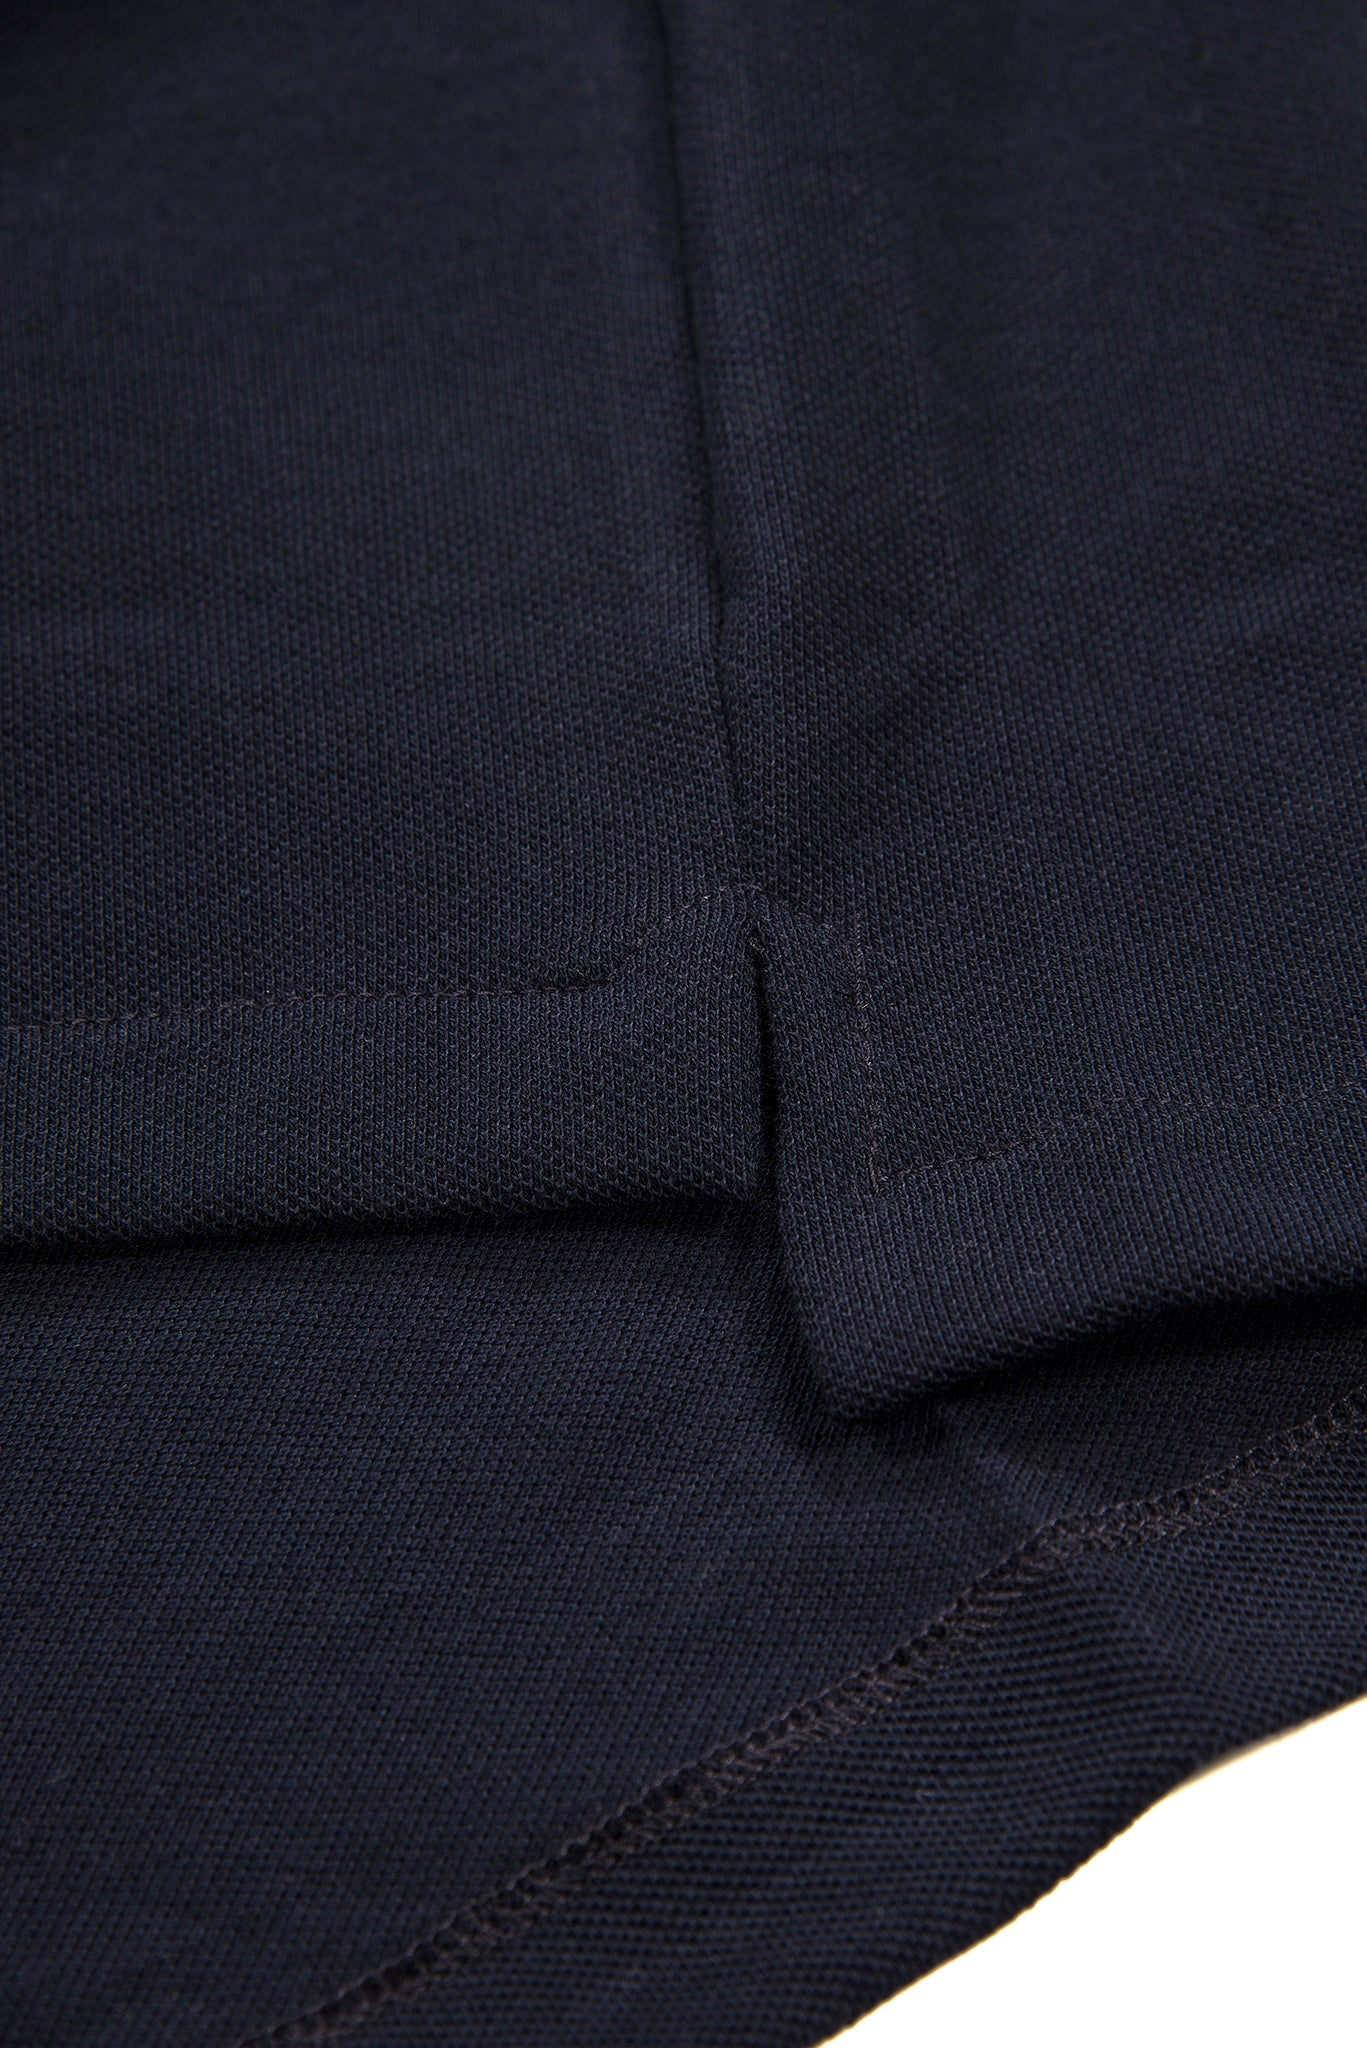 Calist Vintage Polo (dark blue)